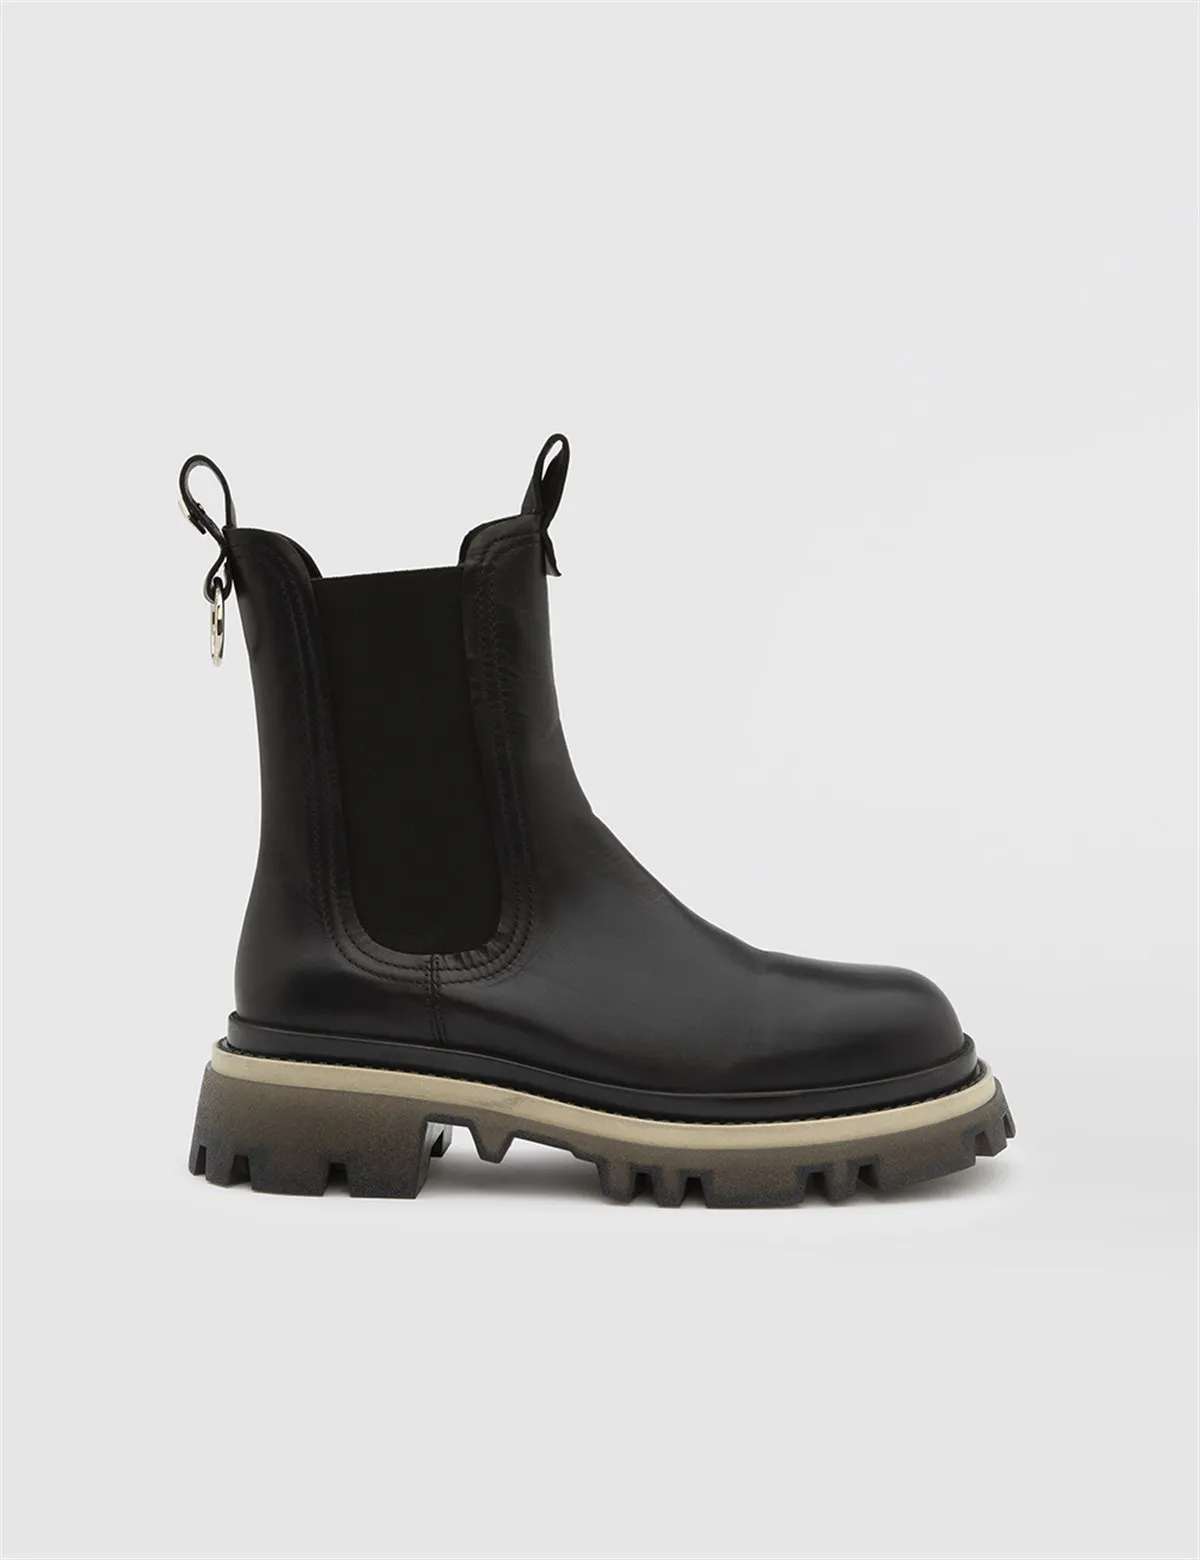 

ILVi-Genuine Leather Handmade Helmut Black Boot Women's Shoes 2022 Fall/Winter